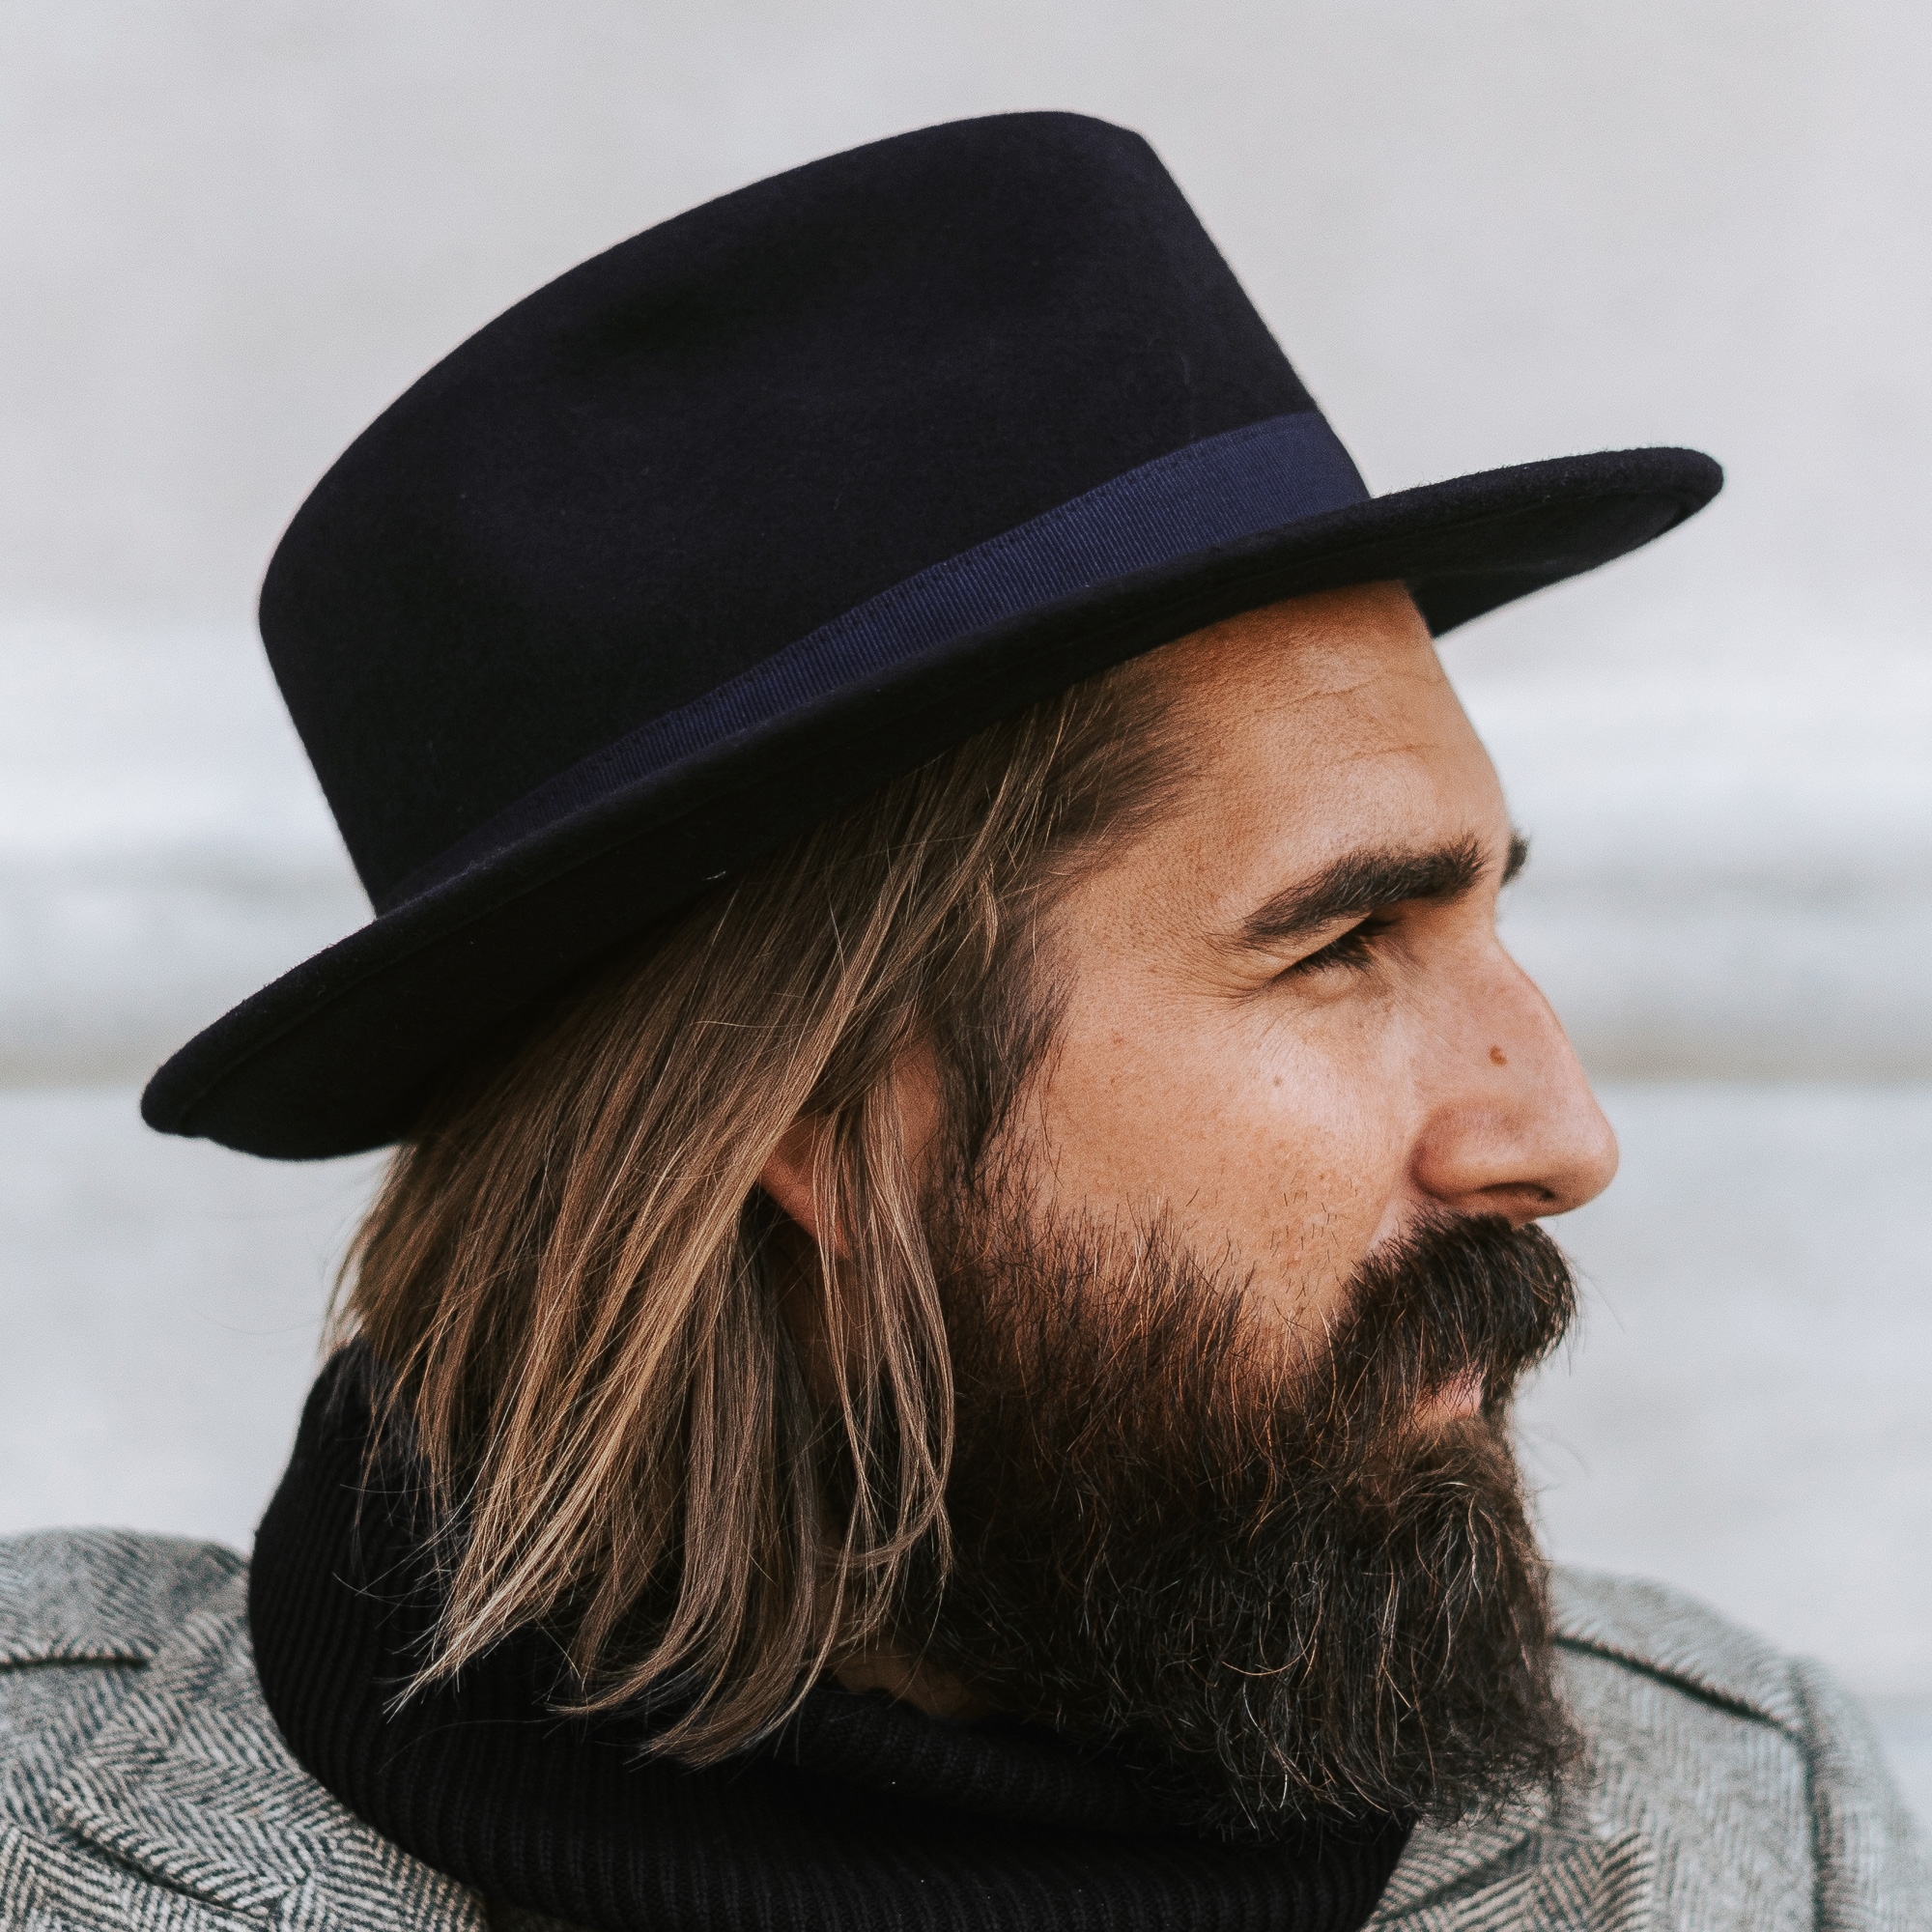 Accessories & jewelry for men - Trendhim.com  Mens dress hats, Beard  styles for men, Classy hats